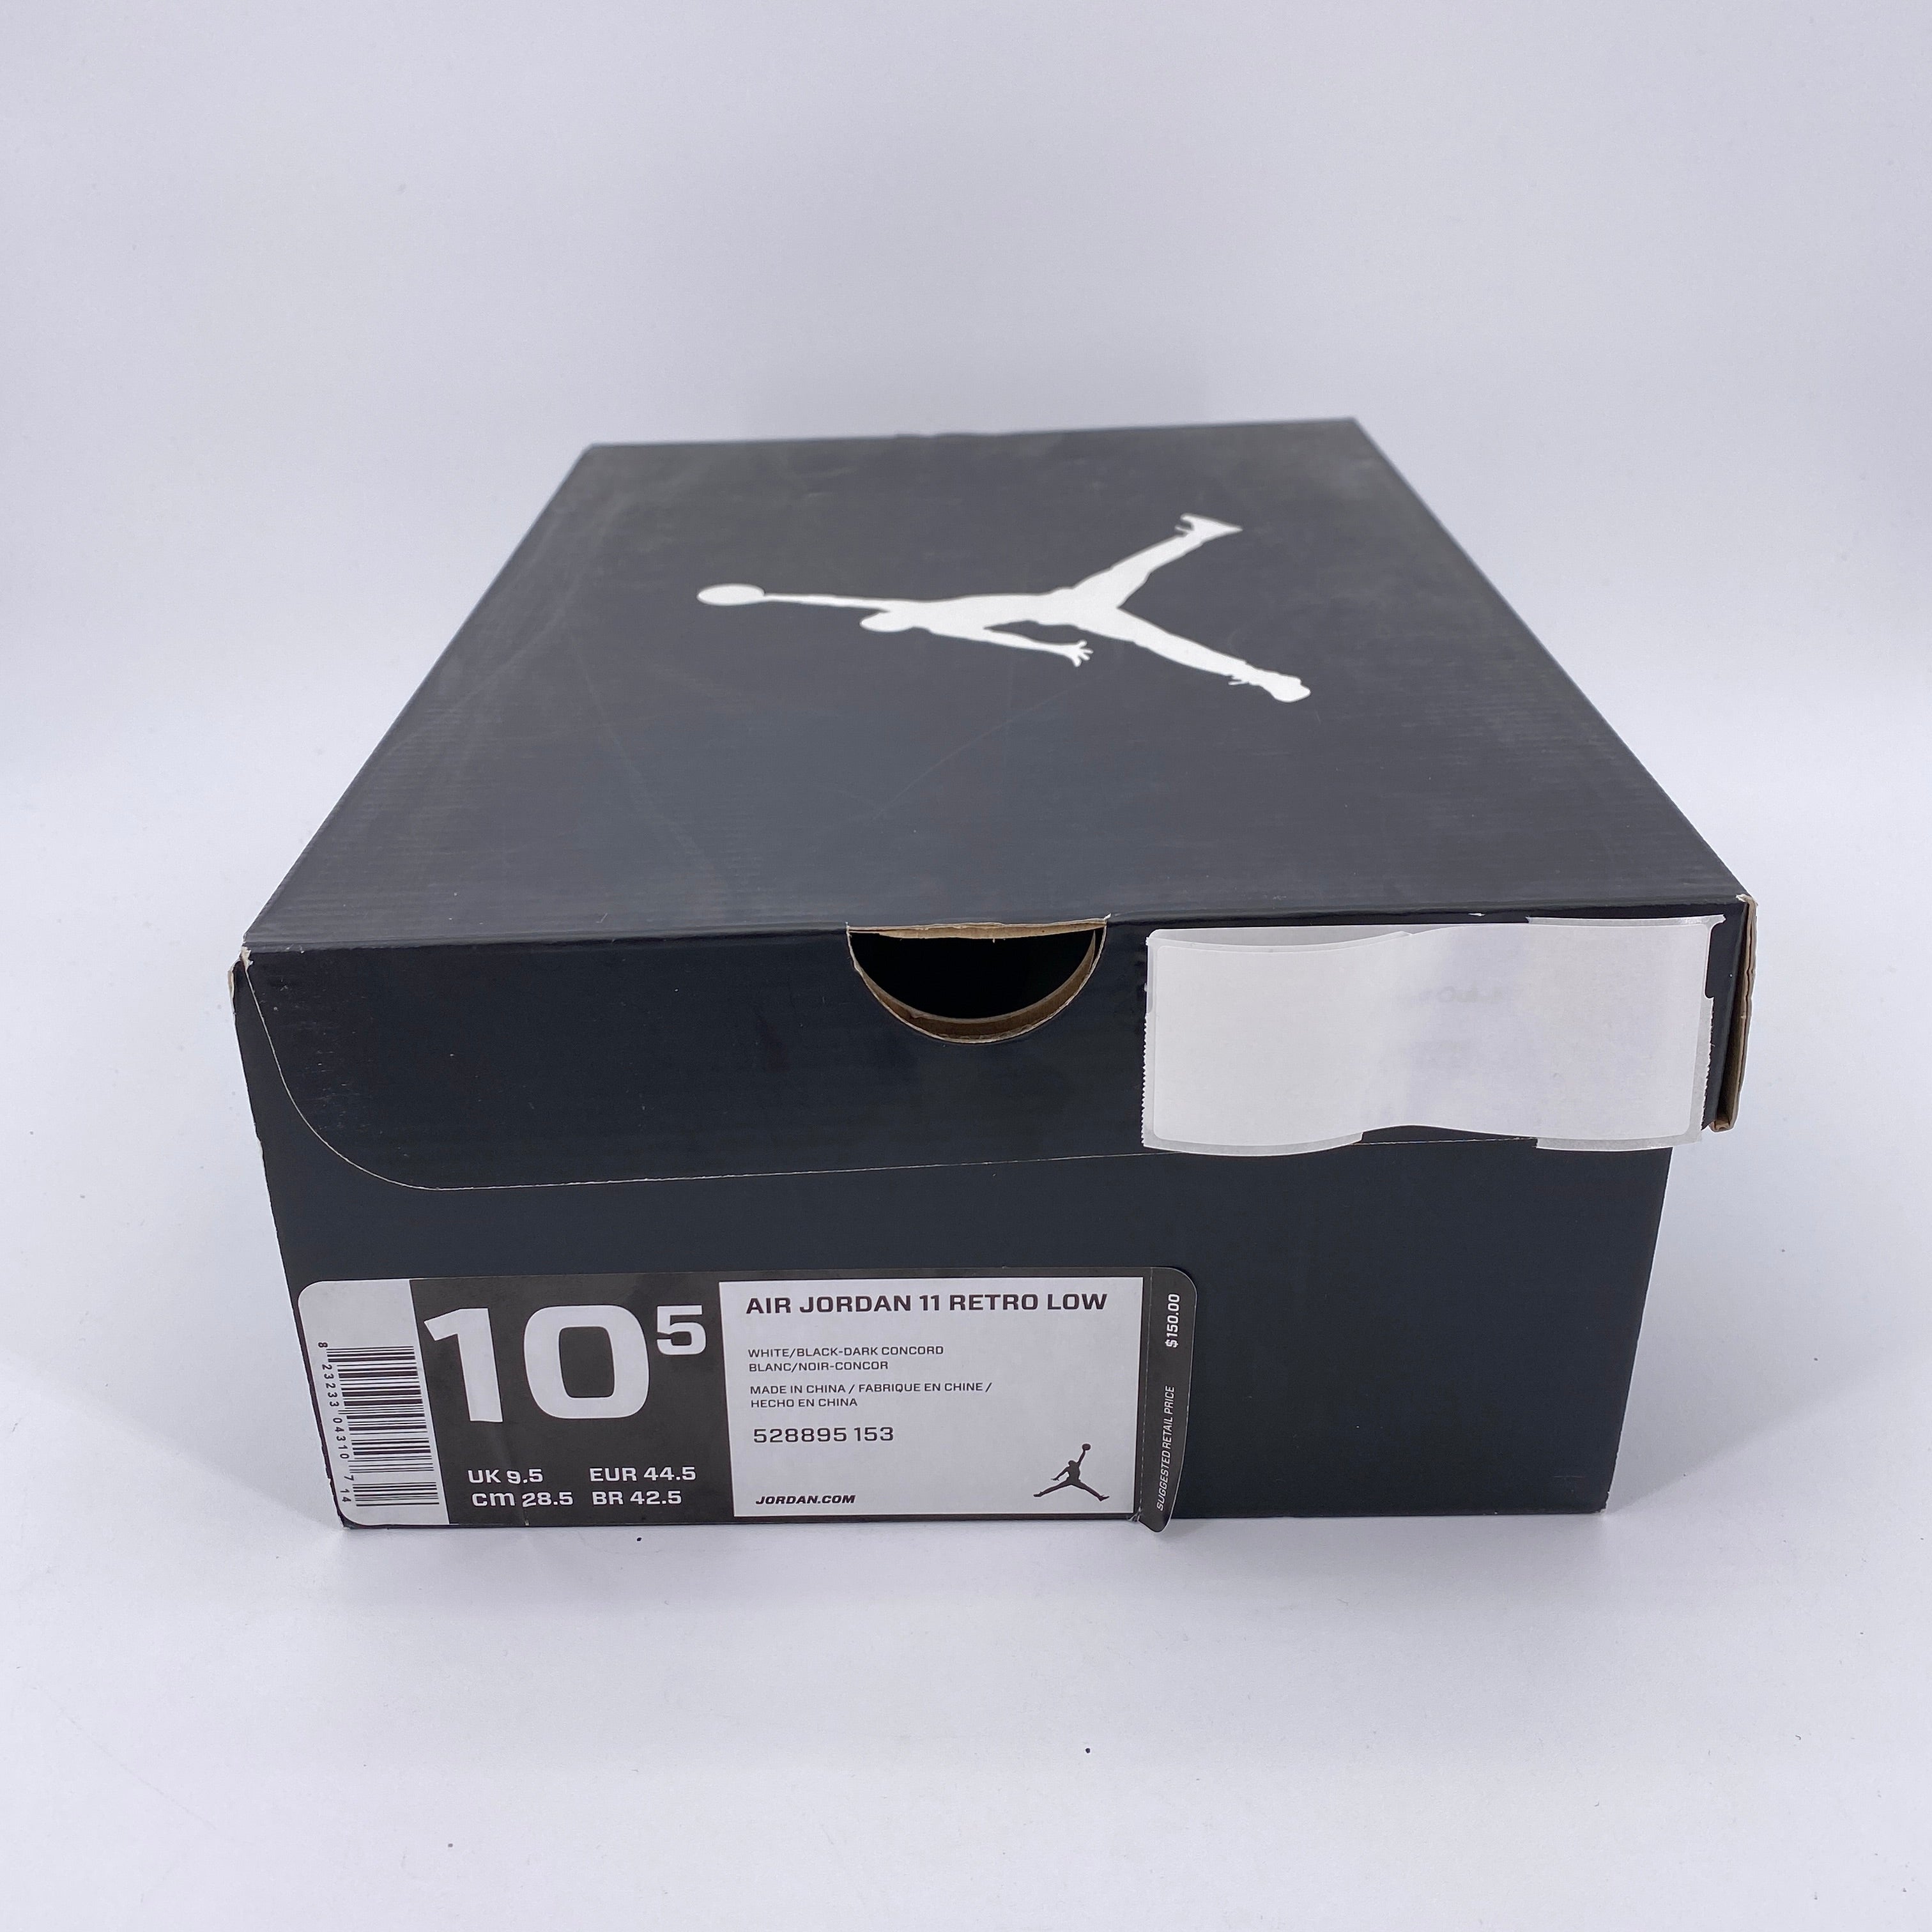 Air Jordan 11 Retro Low "Concord" 2014 New Size 10.5